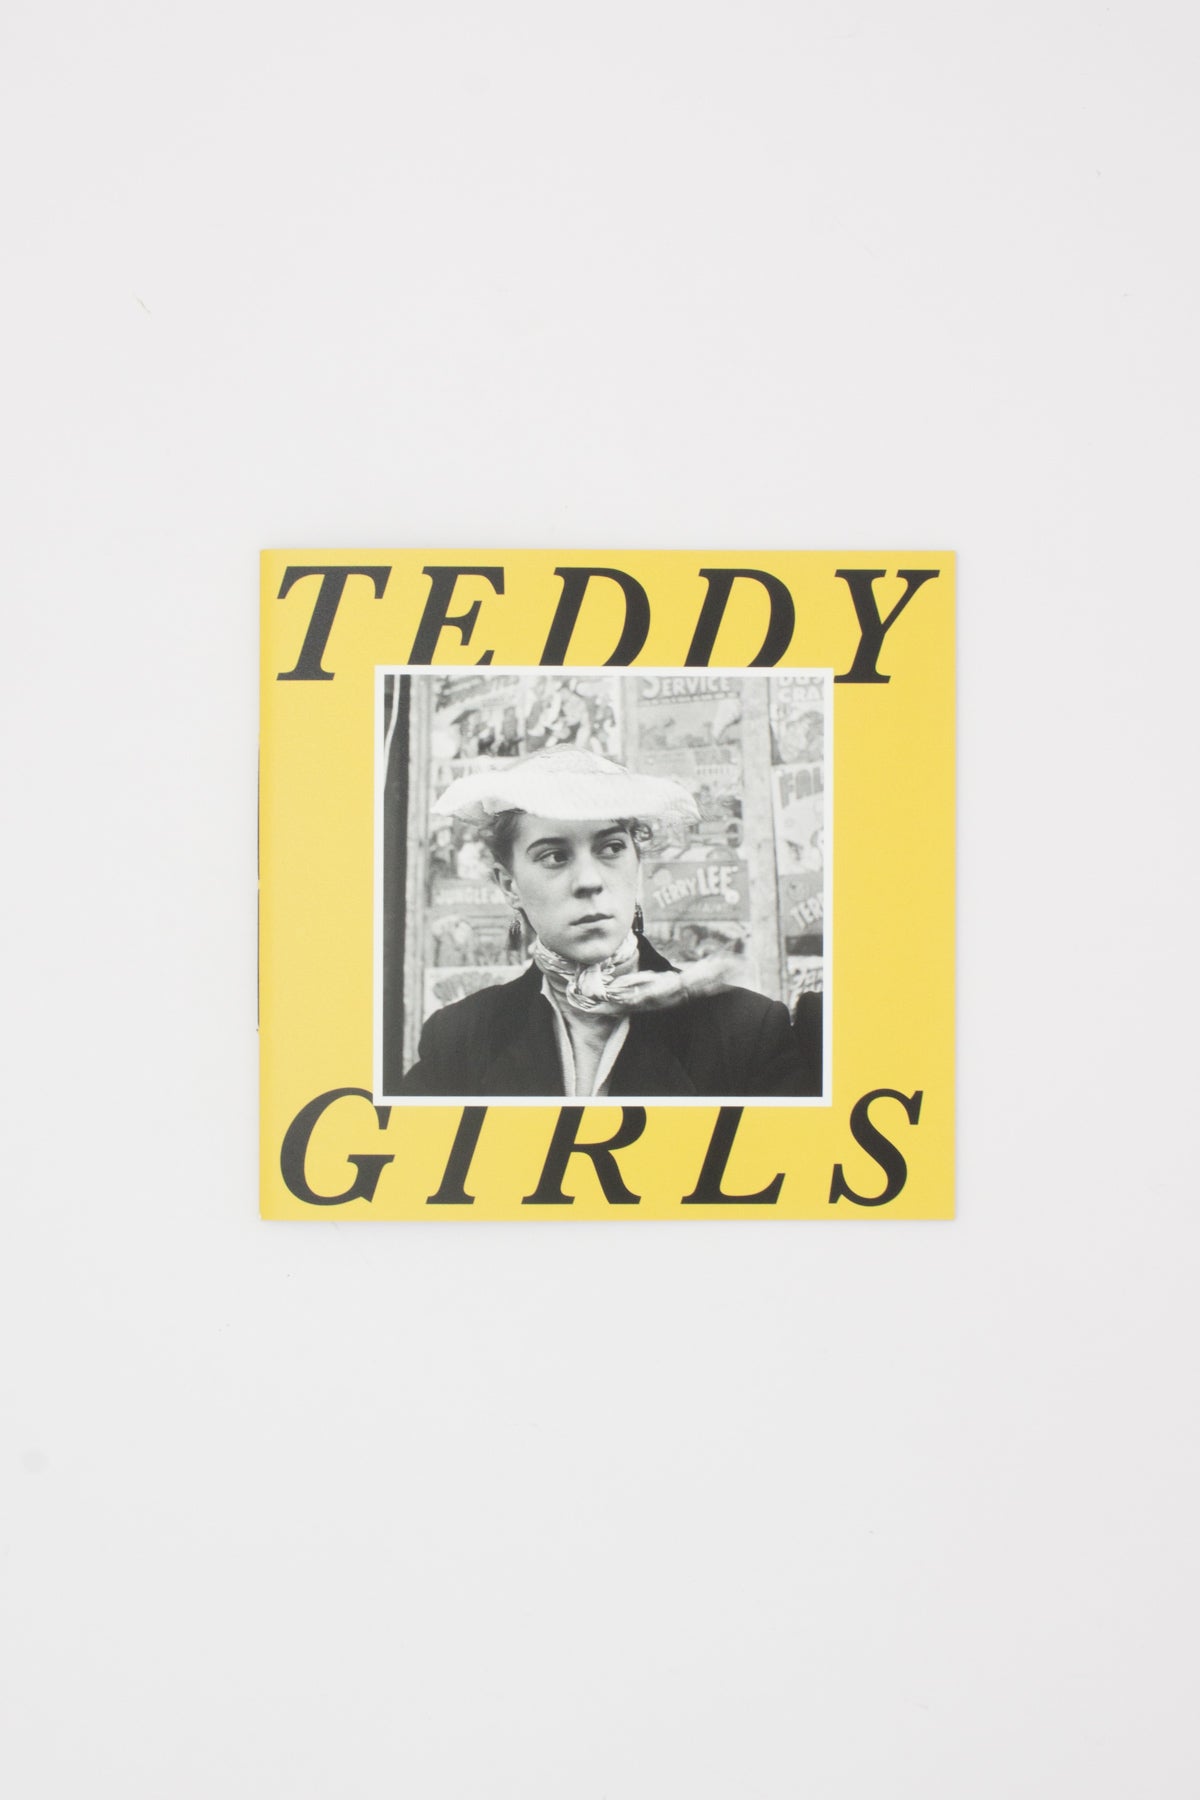 Teddy Girls - Ken Russell